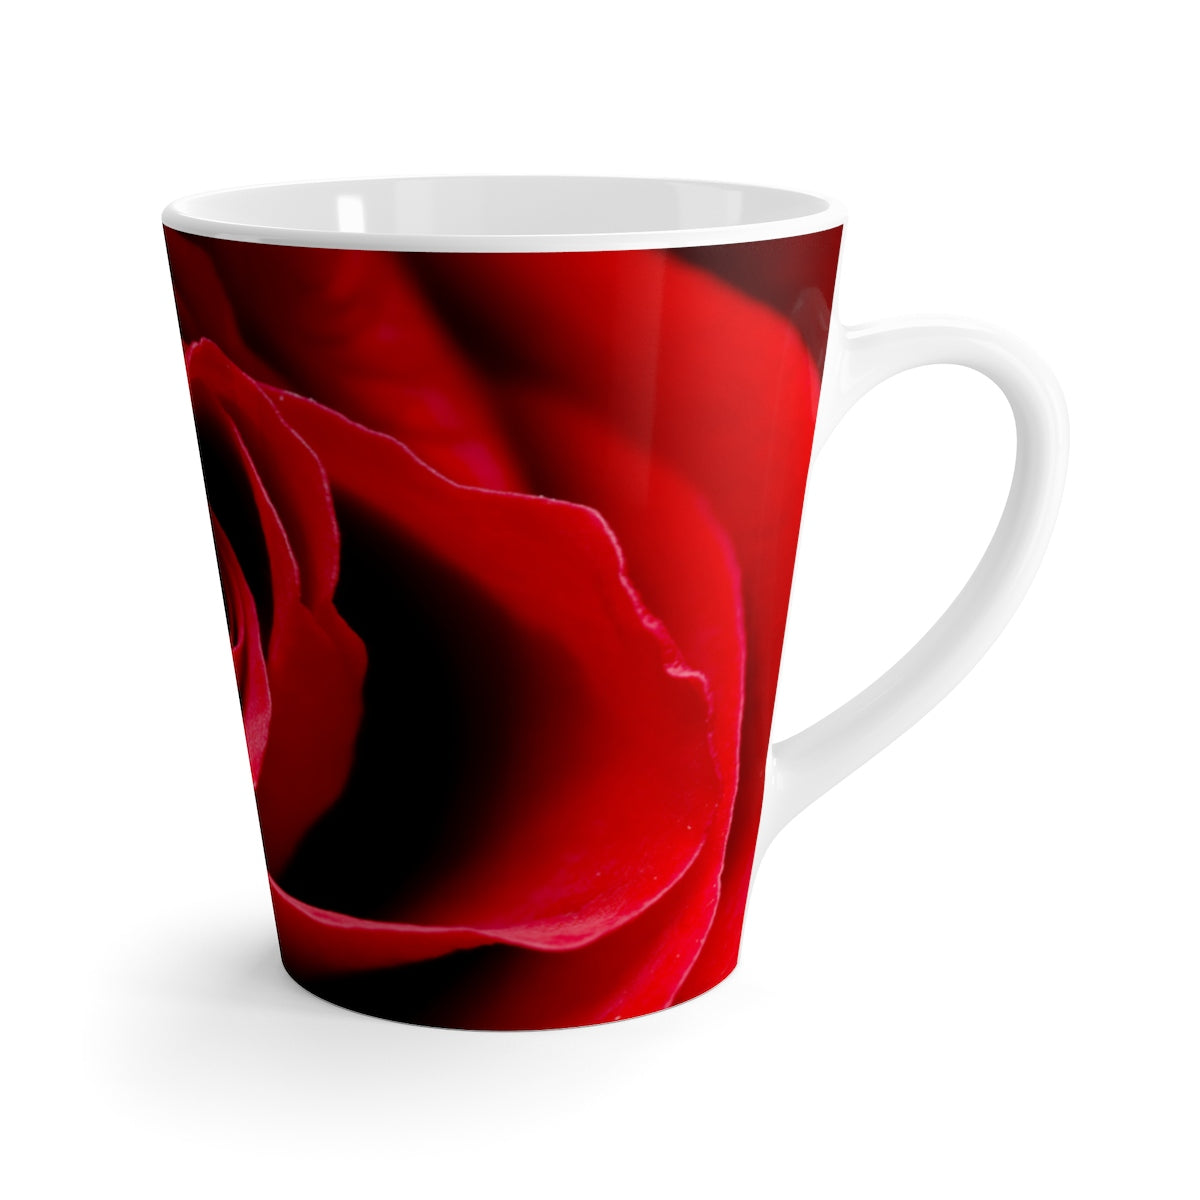 Rose Latte Mug + Your Name + DOB